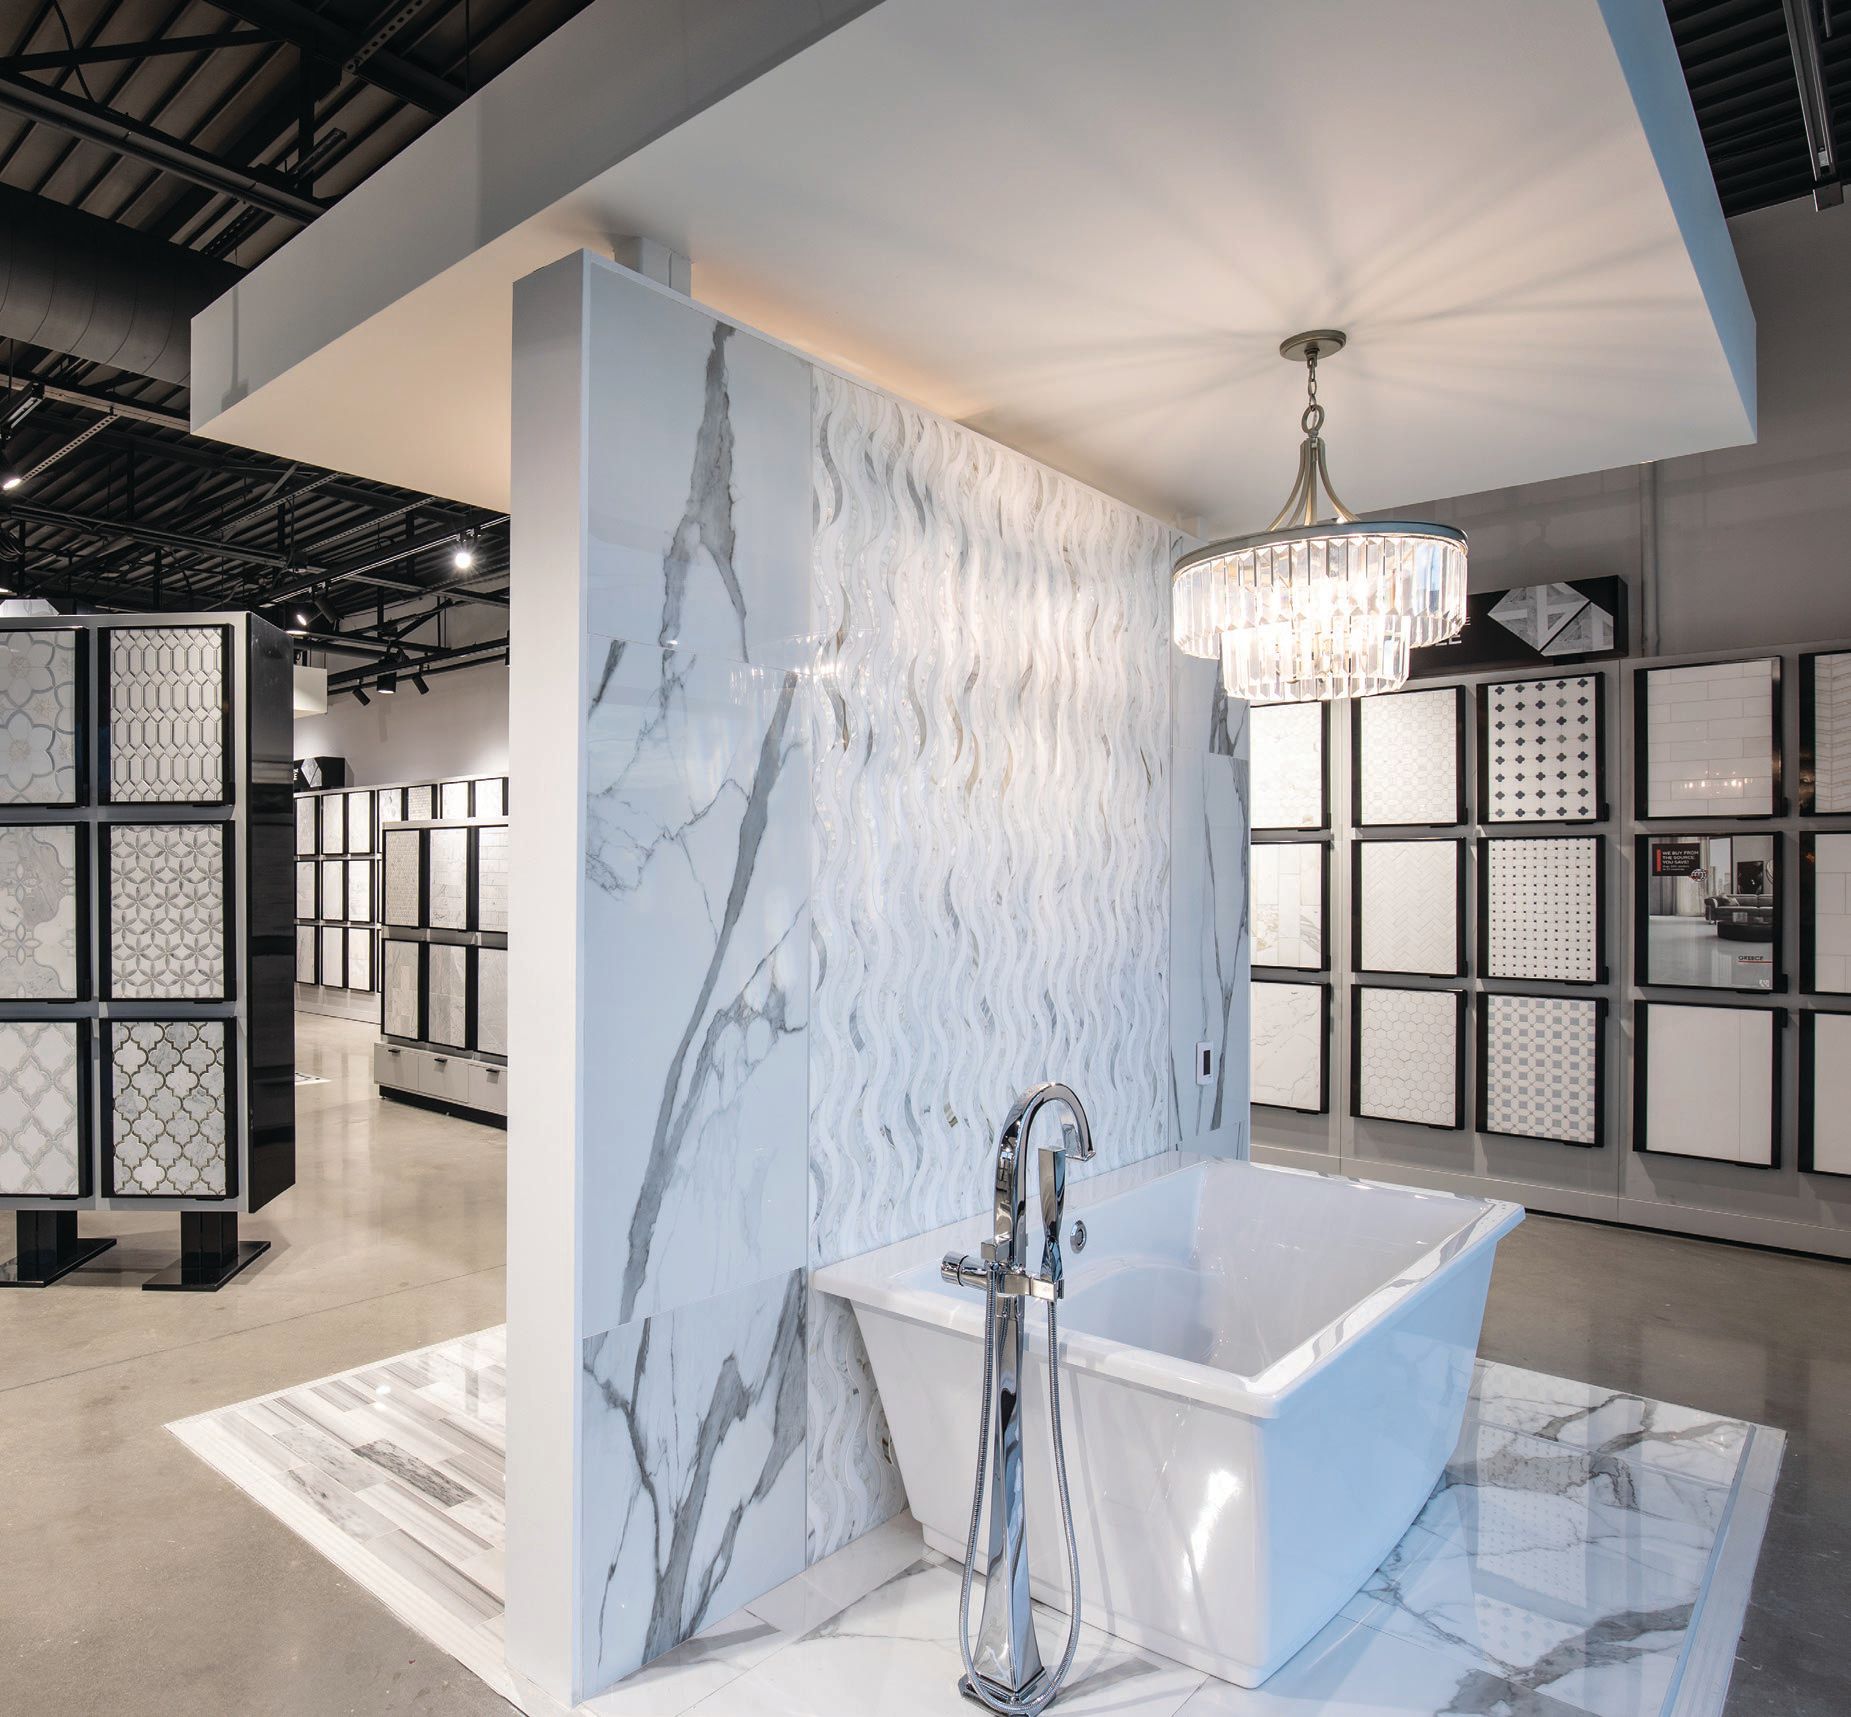 Floor & Decor's Buckhead Location Opens New Doors for ATL Home Design